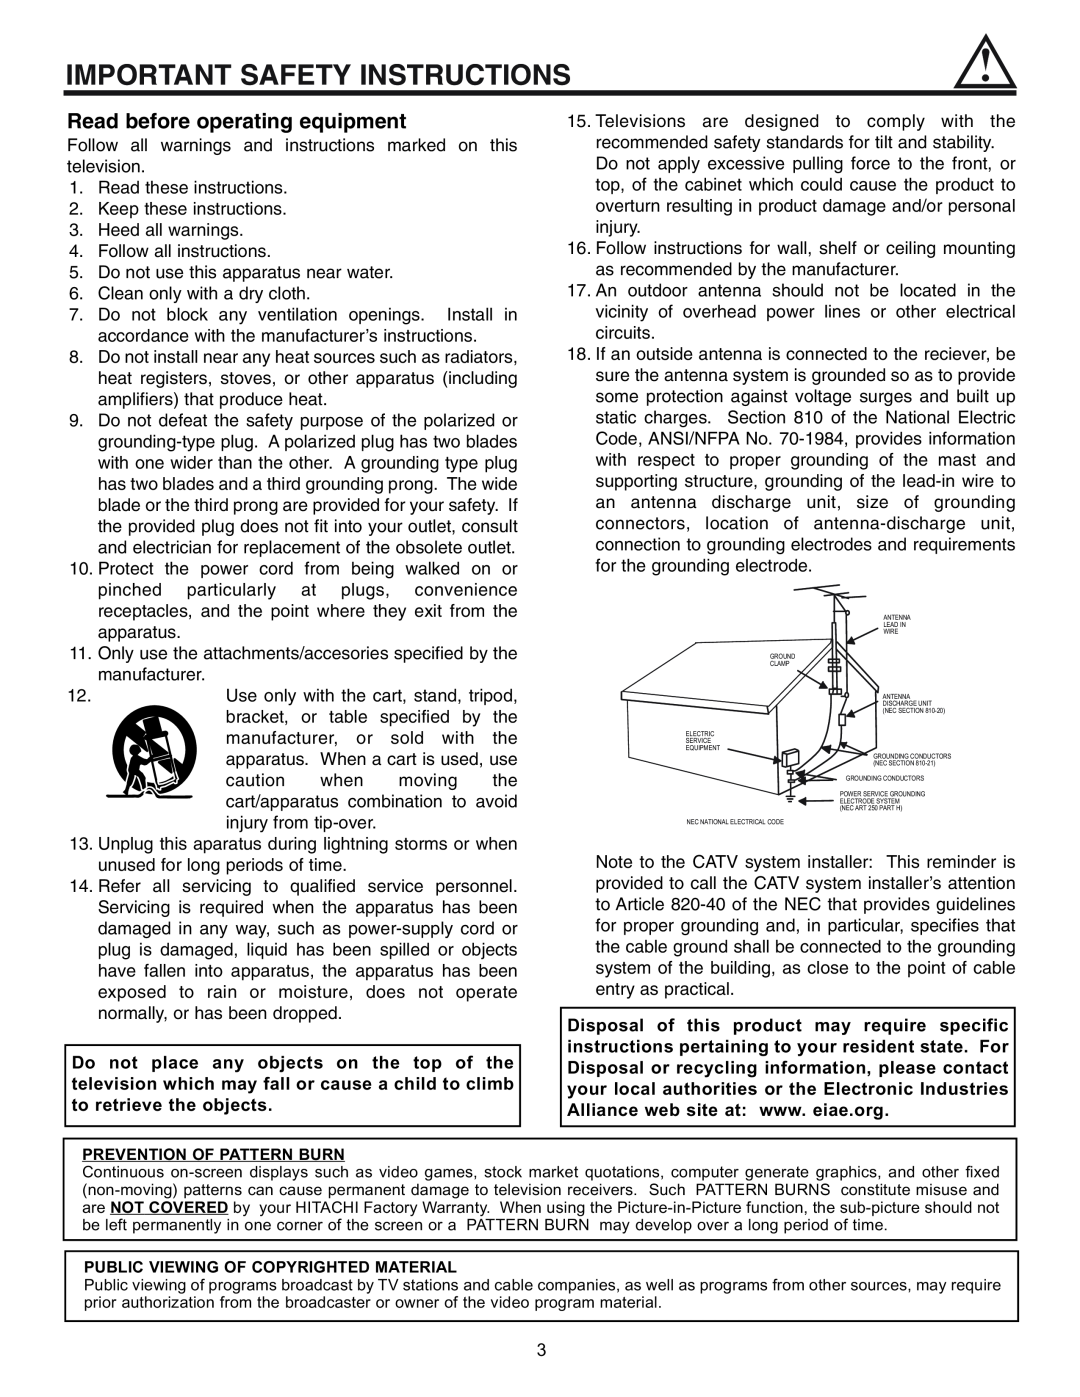 Hitachi 32UDX10S, 36UDX10S manual Read before operating equipment, Important Safety Instructions 